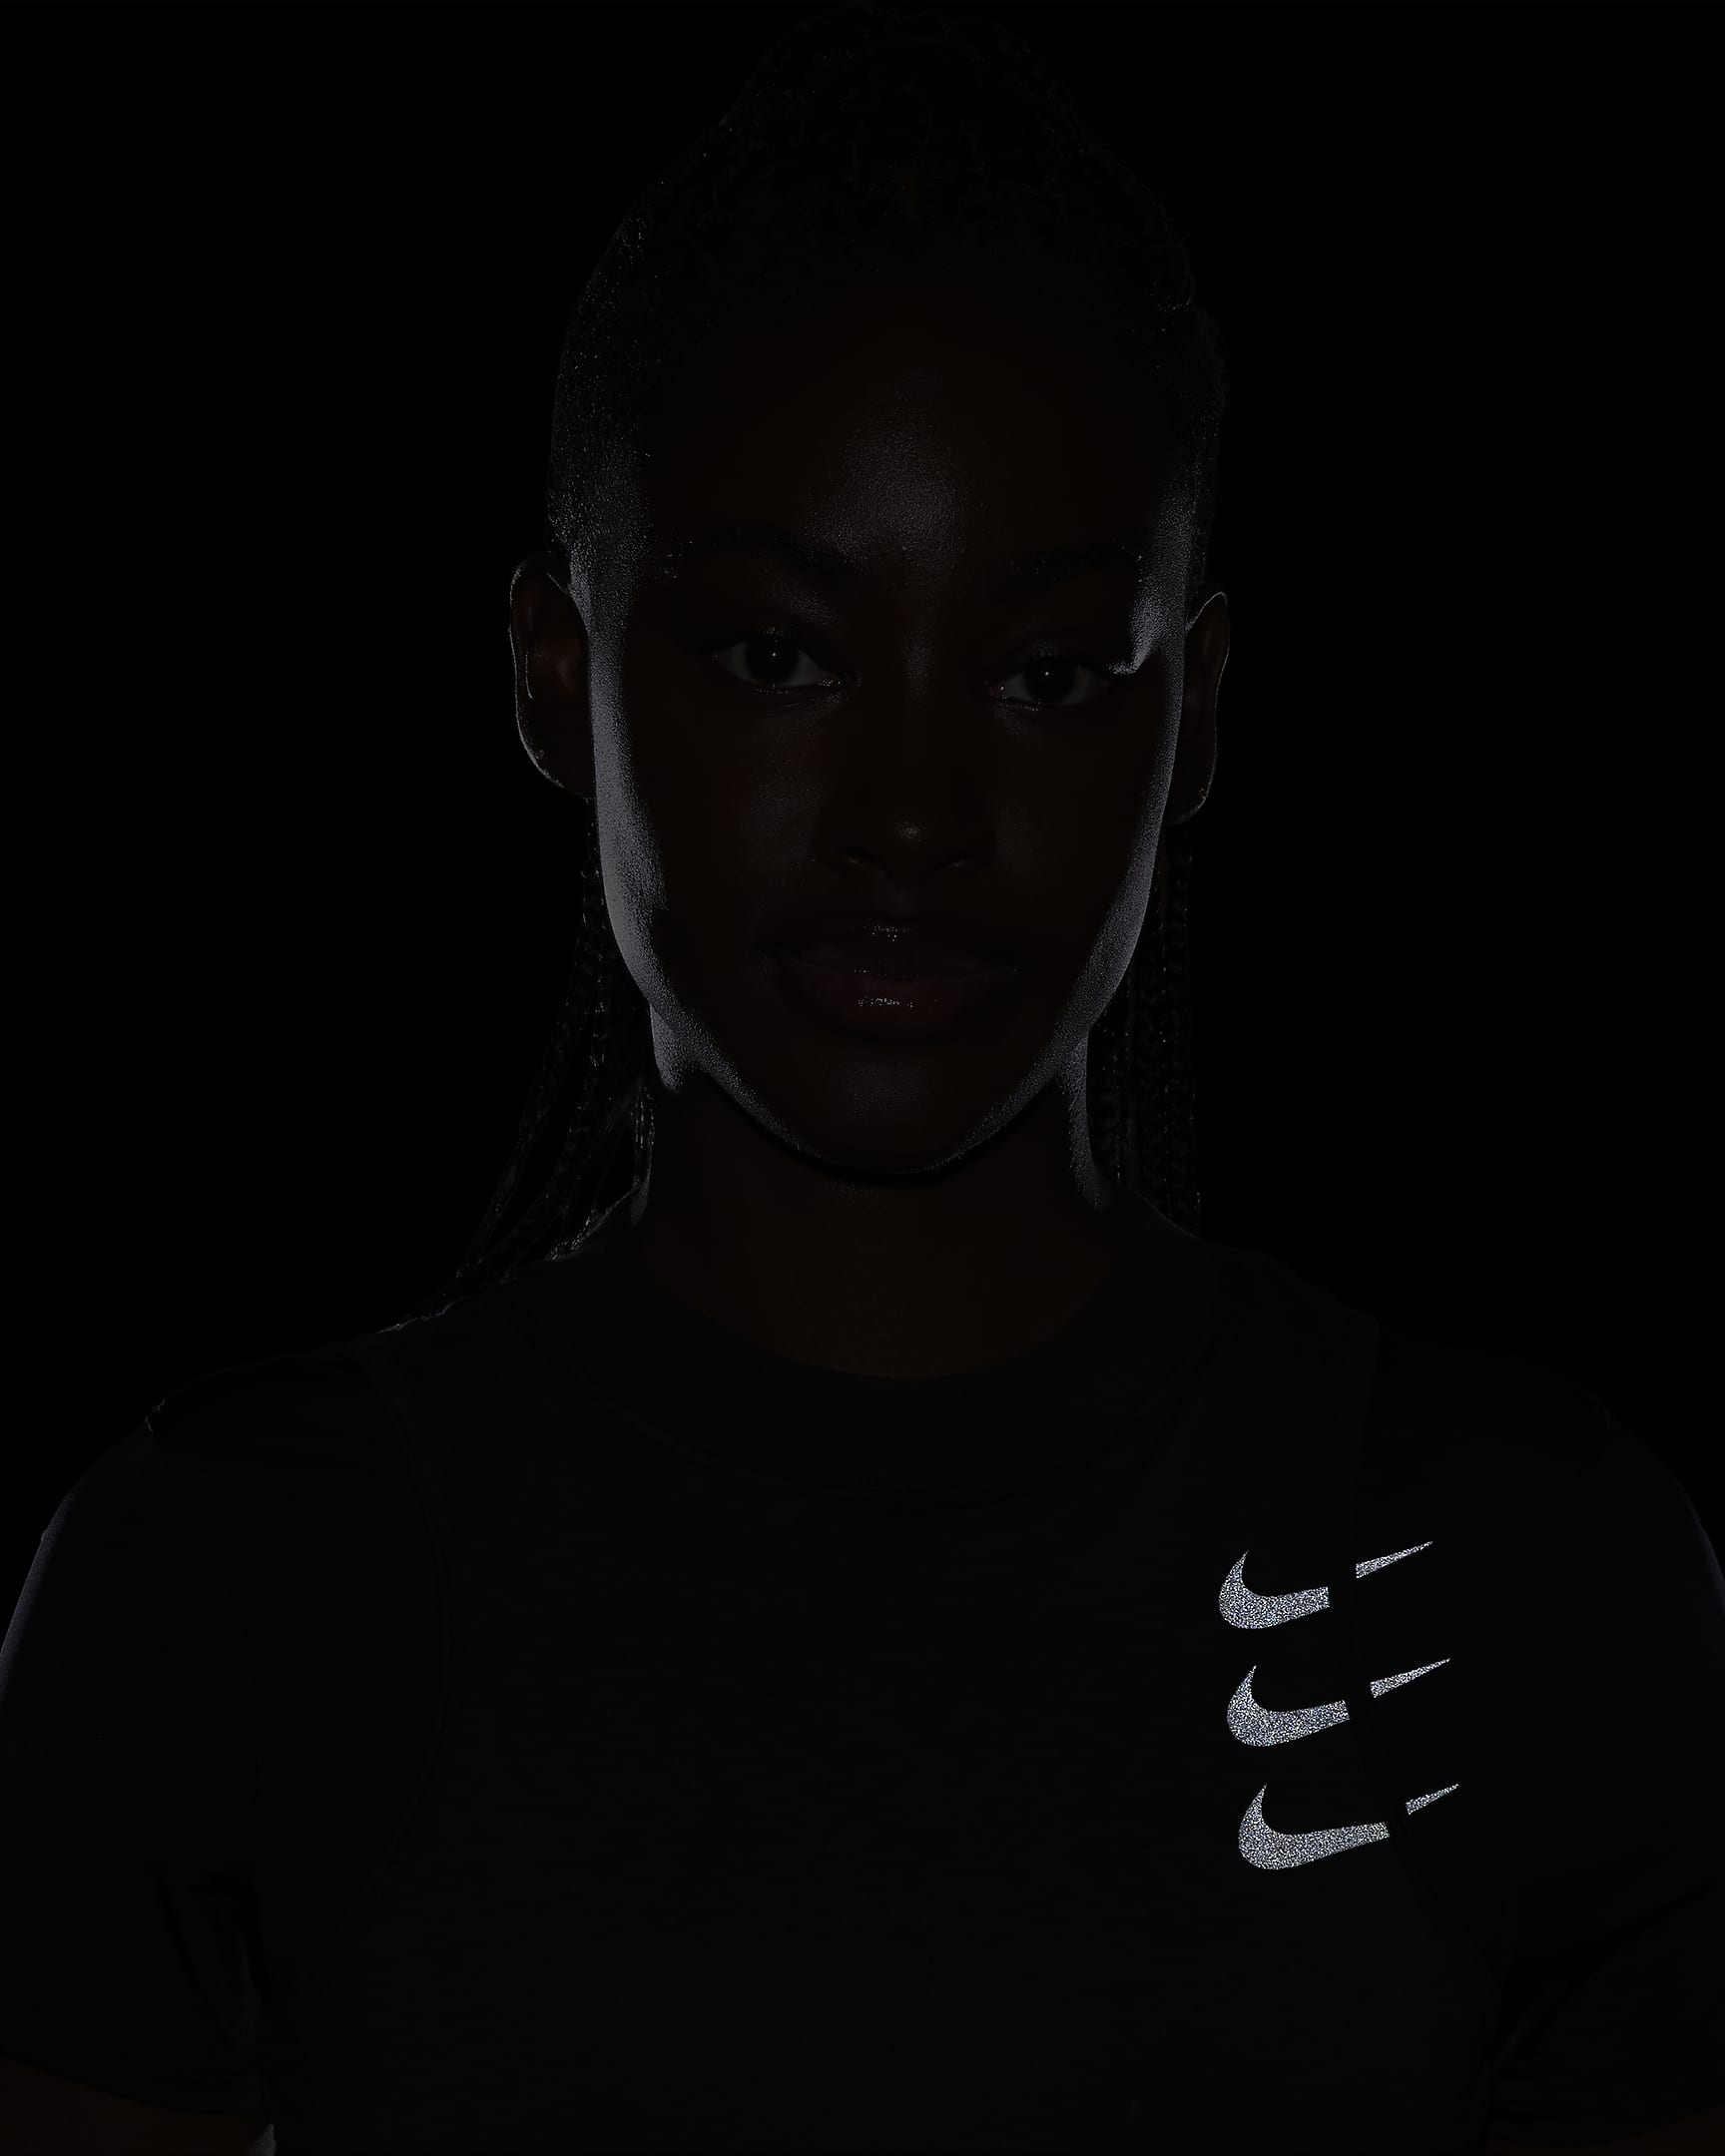 Nike Dri-FIT ADV Running Division Women's Short-Sleeve Running Top. Nike CA